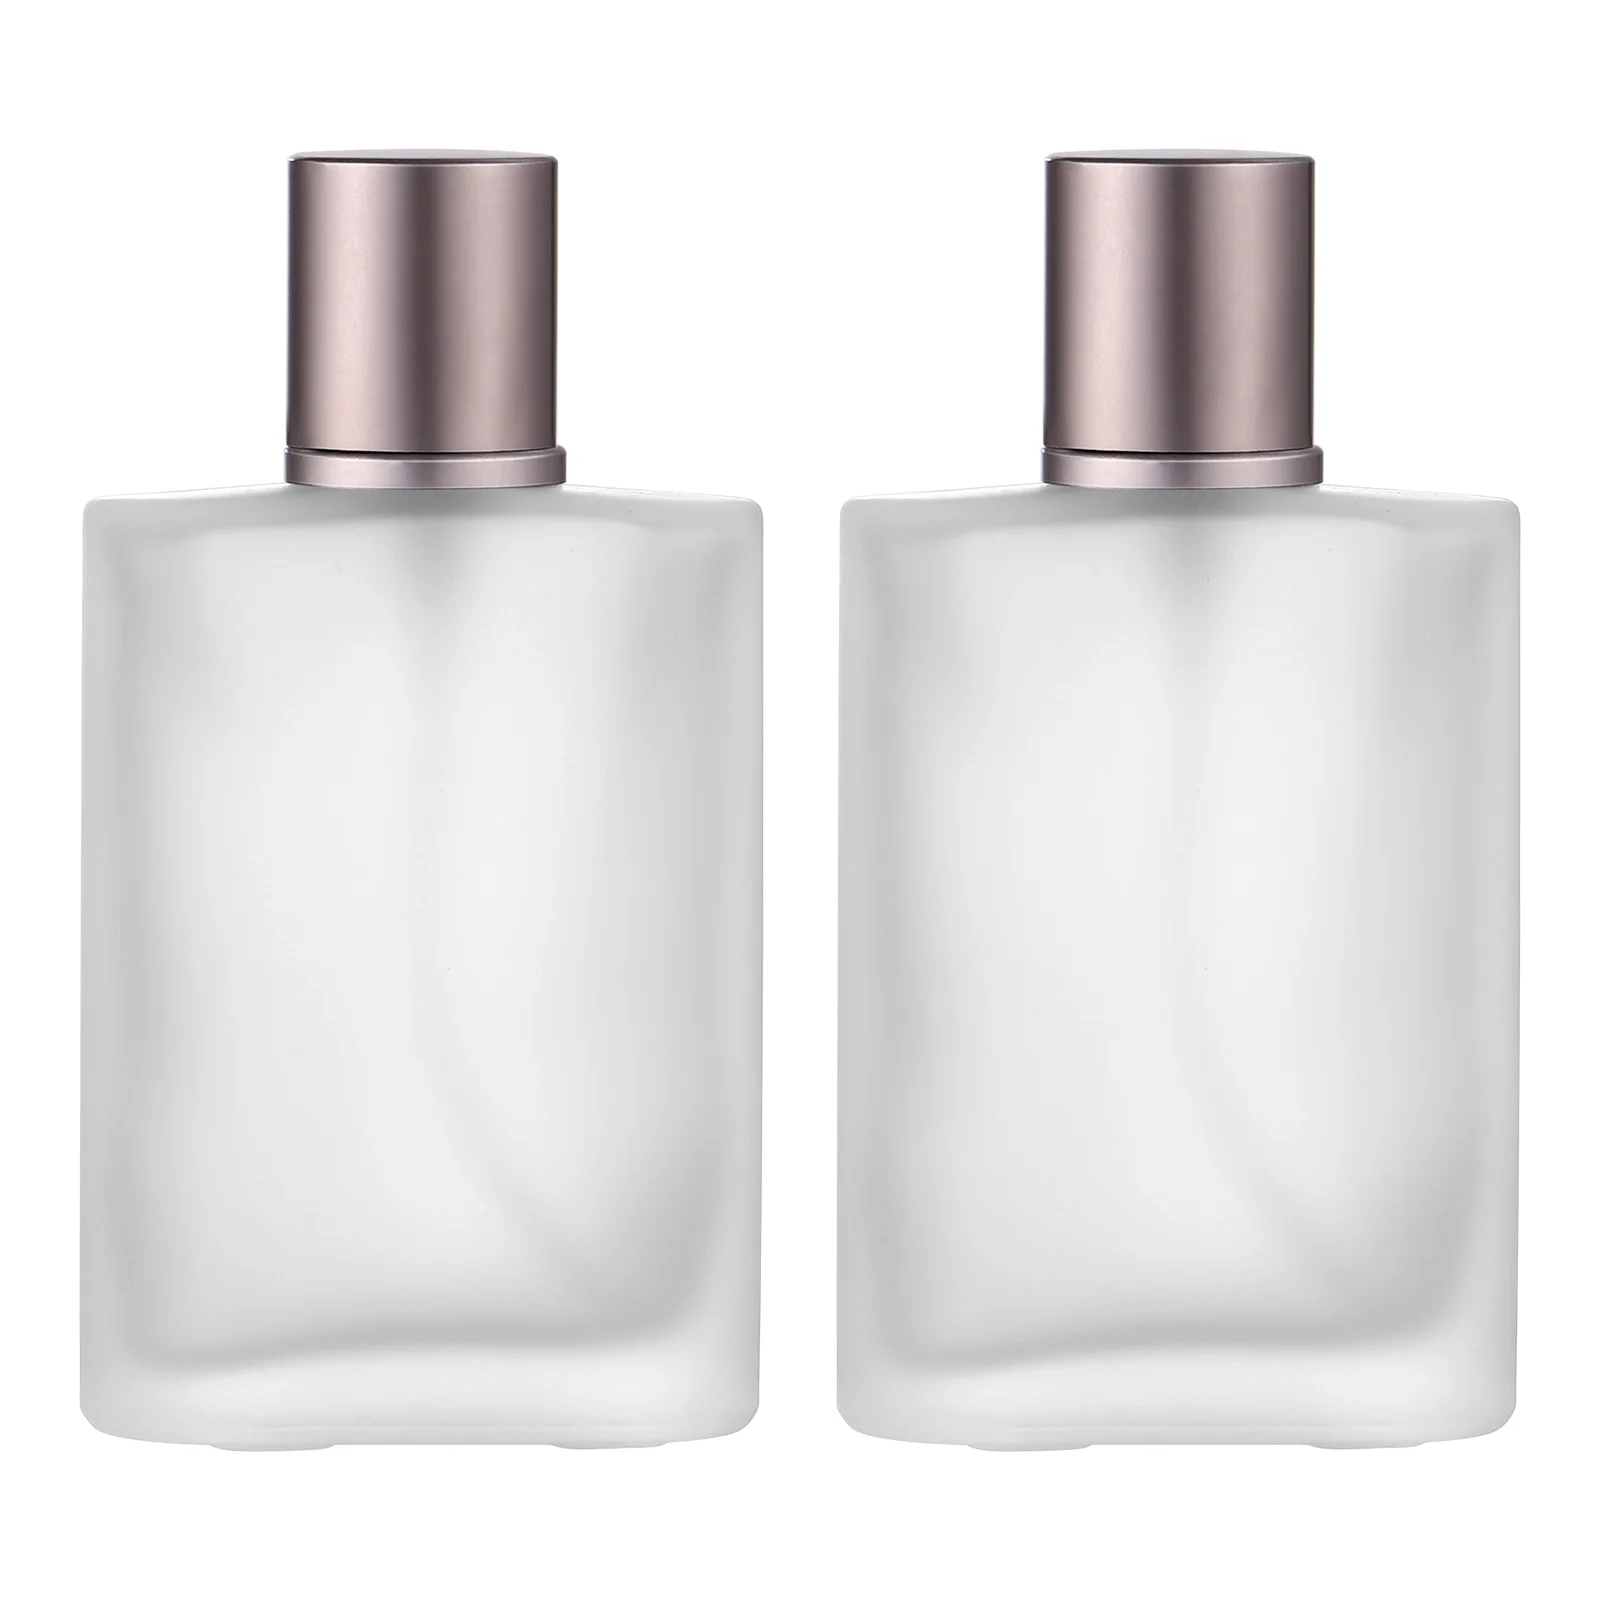 

Lurrose 2pcs Empty Perfume Bottles Dull Polish Spray Bottles Makeup Storage Bottles Supplies for Women Men (50ml)